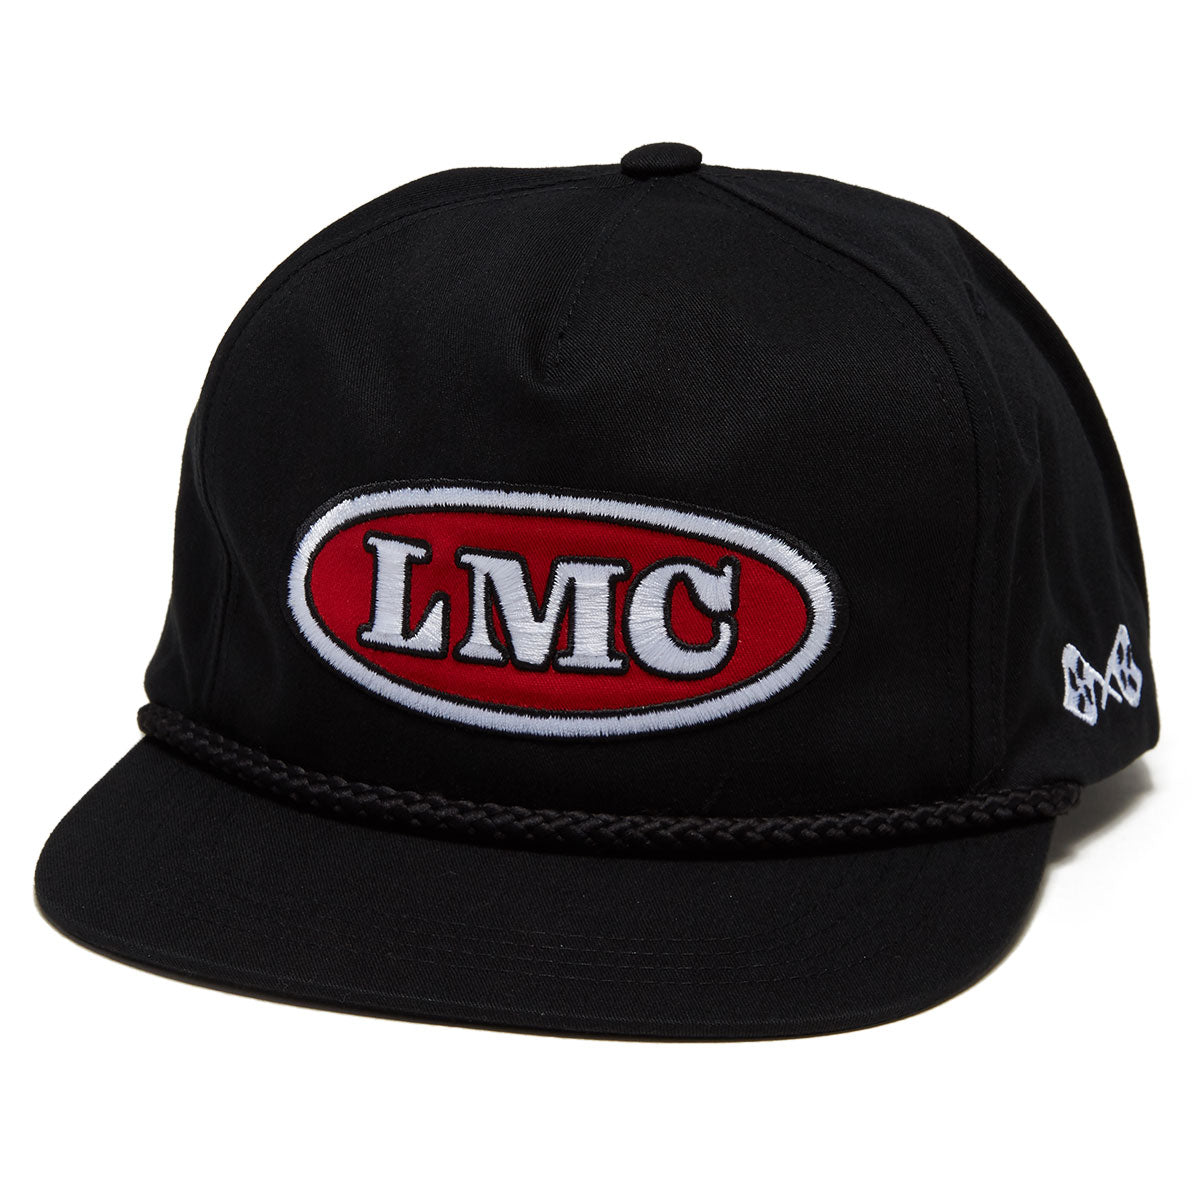 Loser Machine Pipes Hat - Black image 1